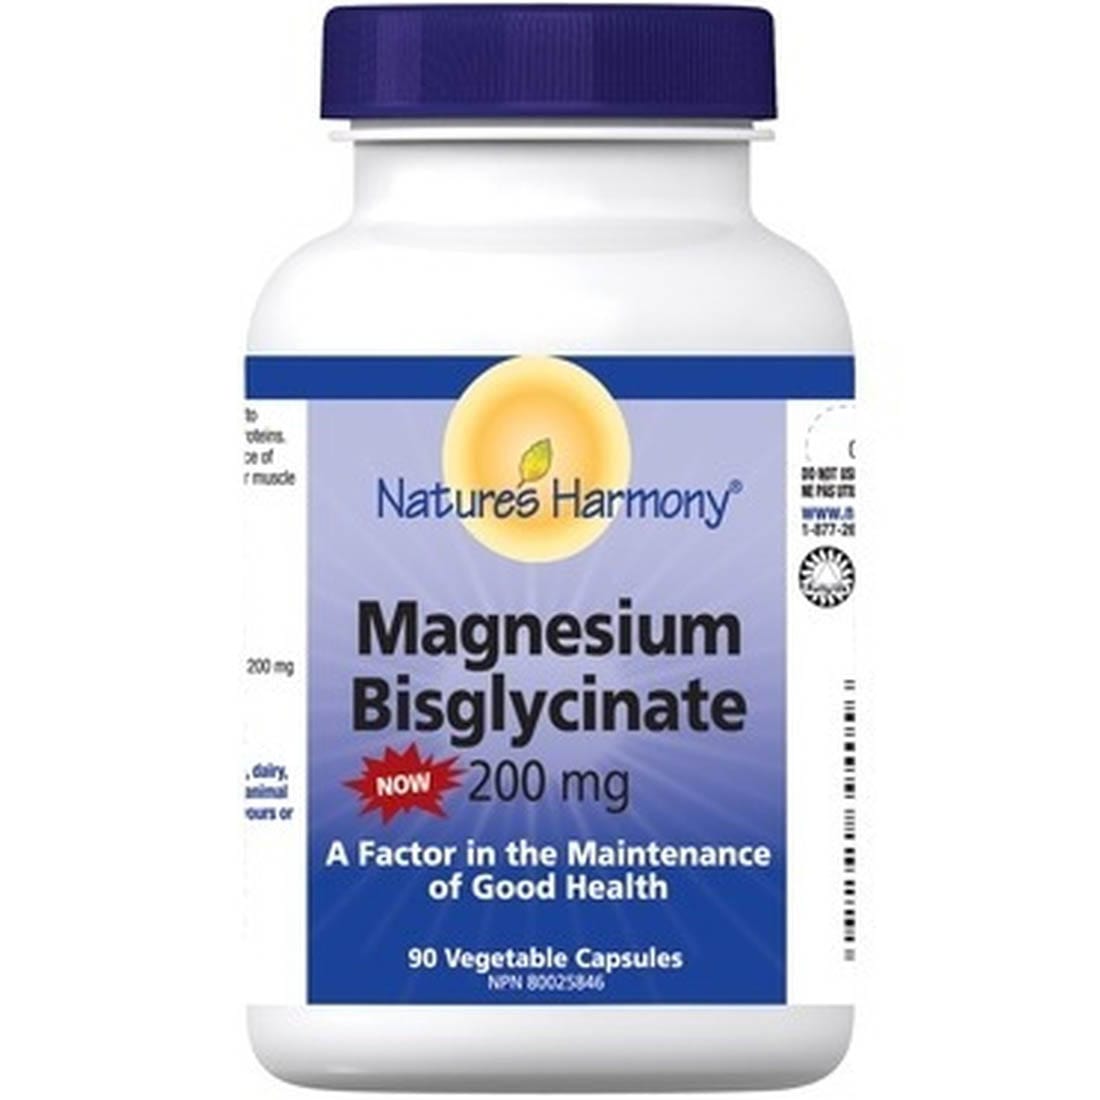 Nature's Harmony Magnesium Bisglycinate 200mg, 90 Vegetable Capsules